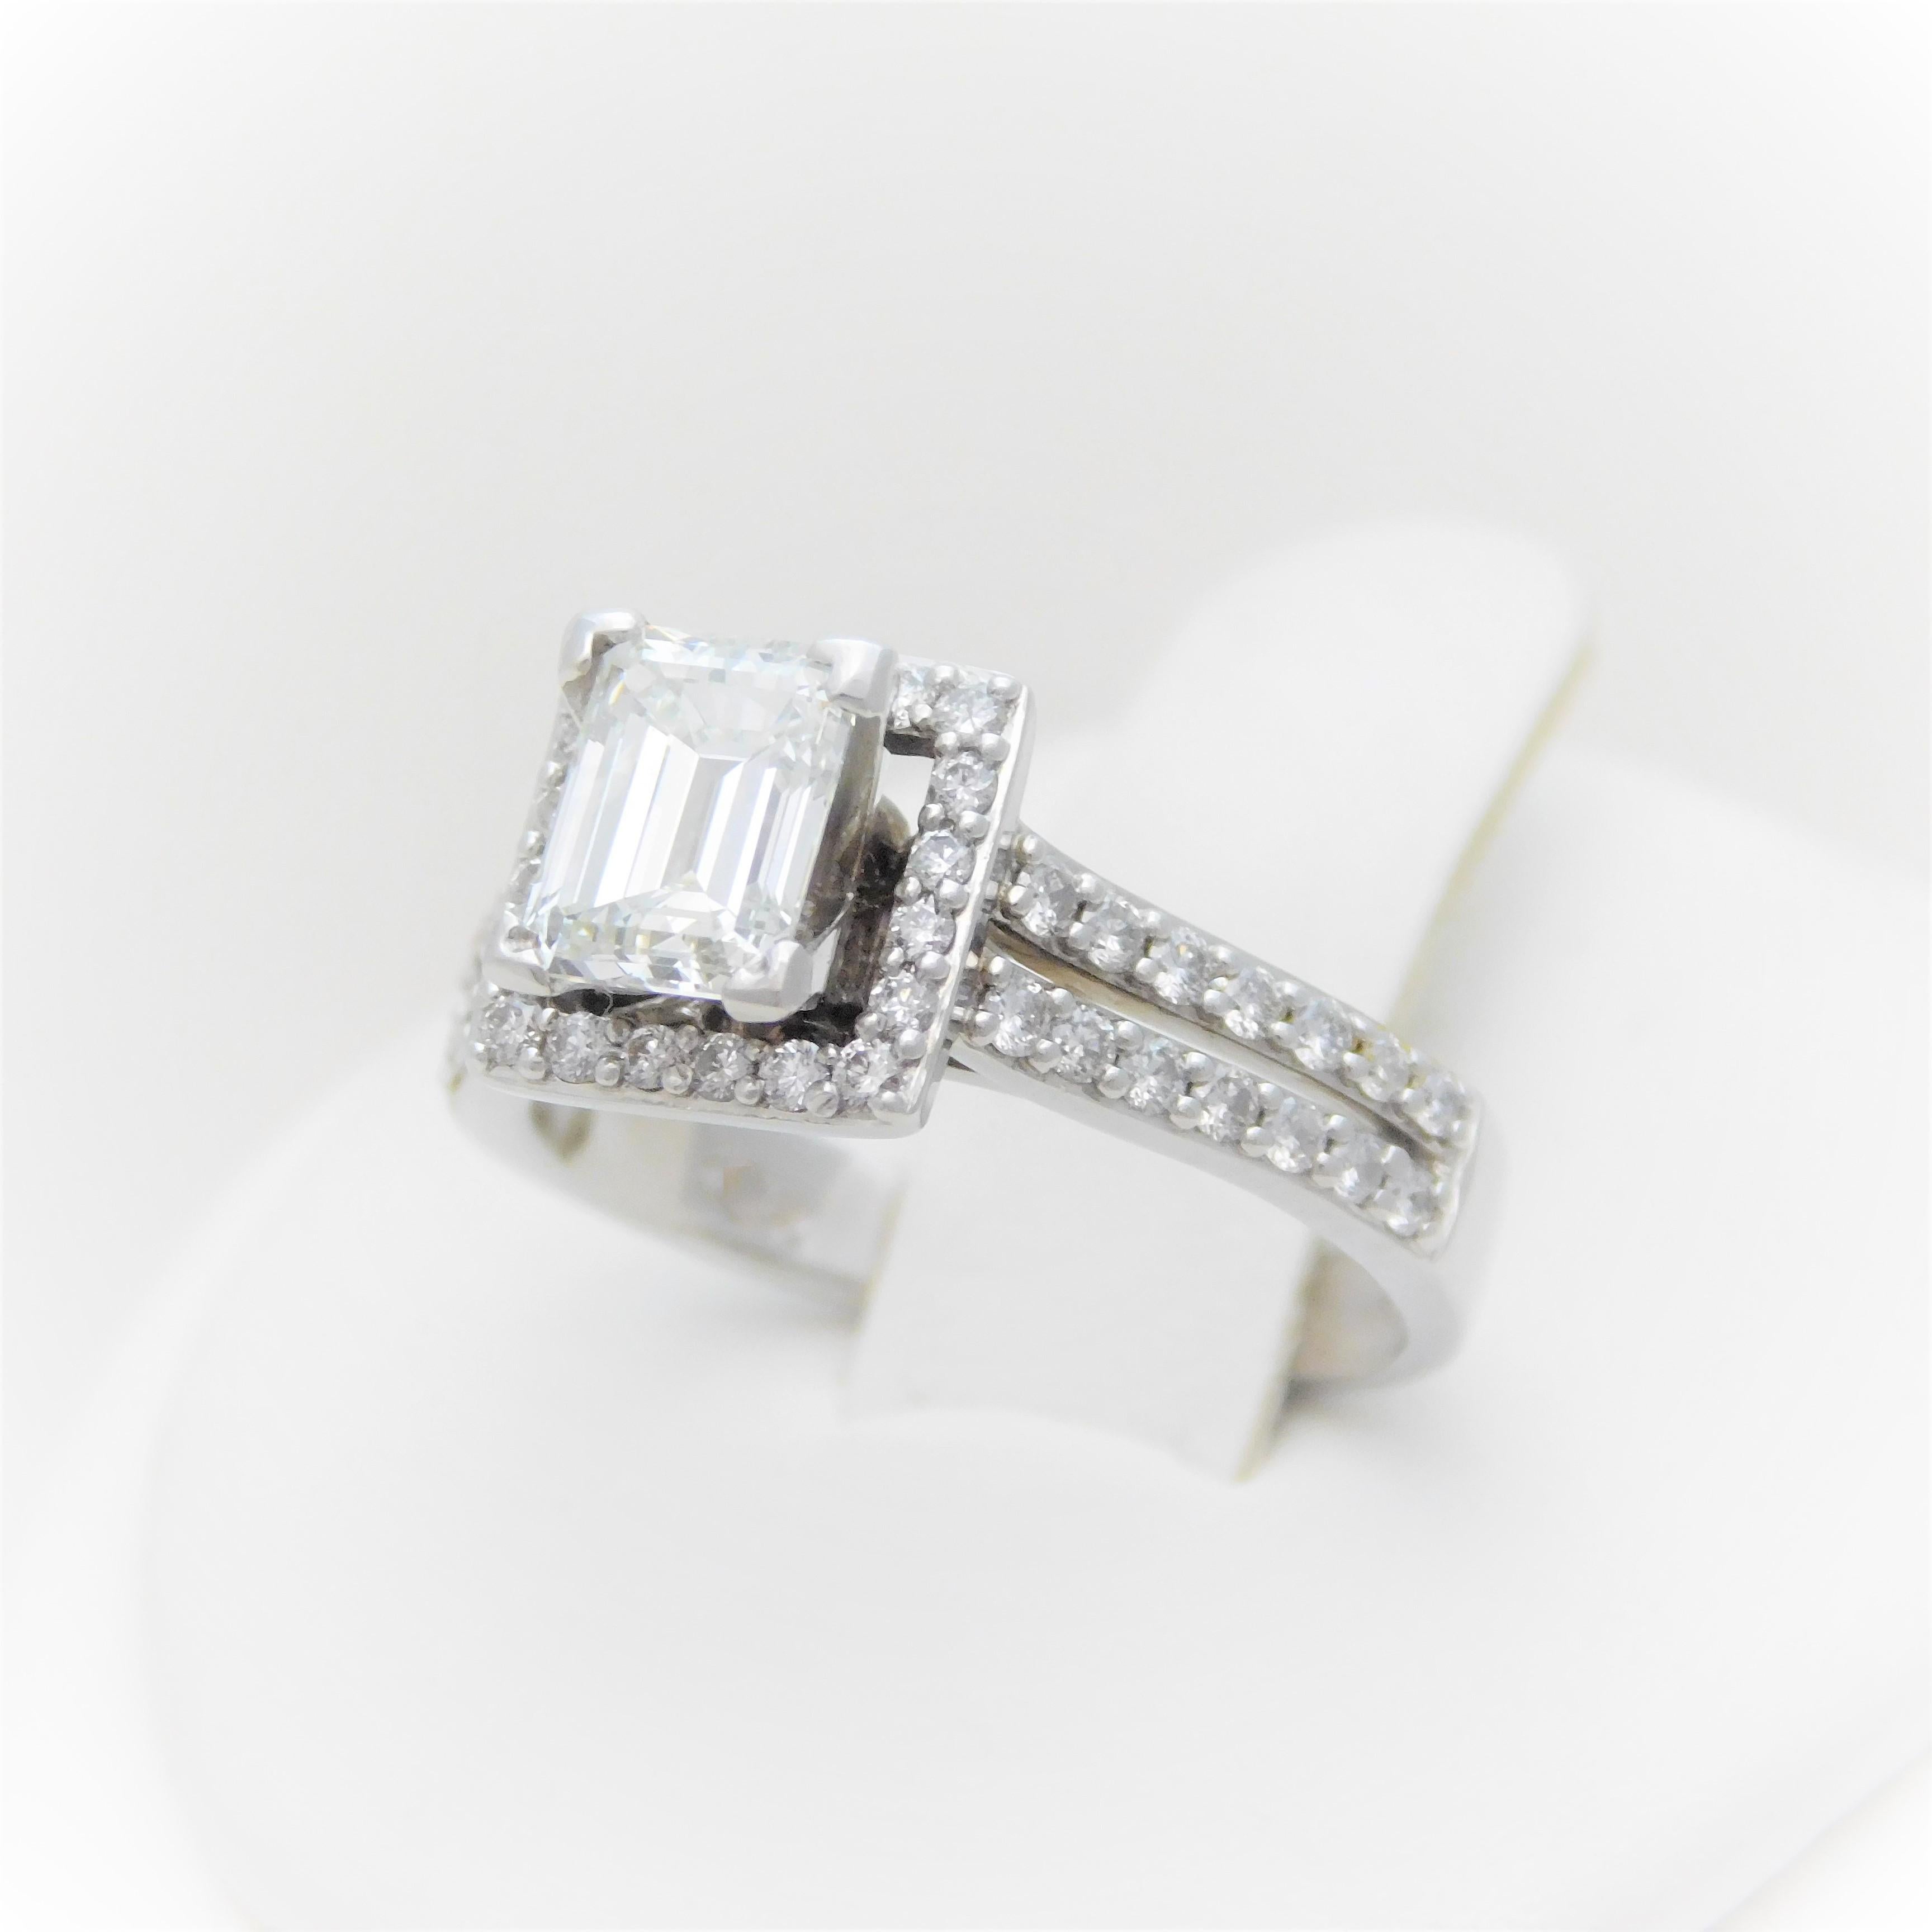 UGS Certified 2.18 Carat Emerald Cut Diamond Engagement Ring 6